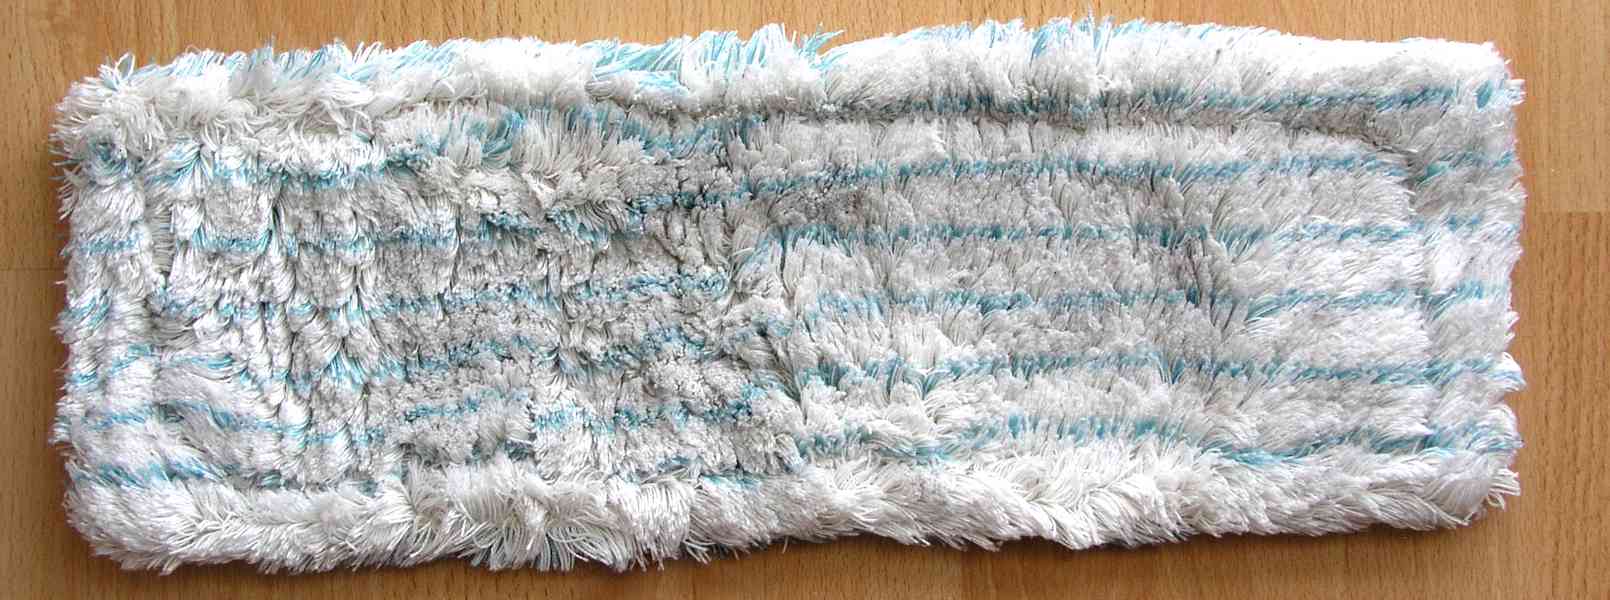  Návlek cotton plus  na mop Leifheit Combi 41 cm